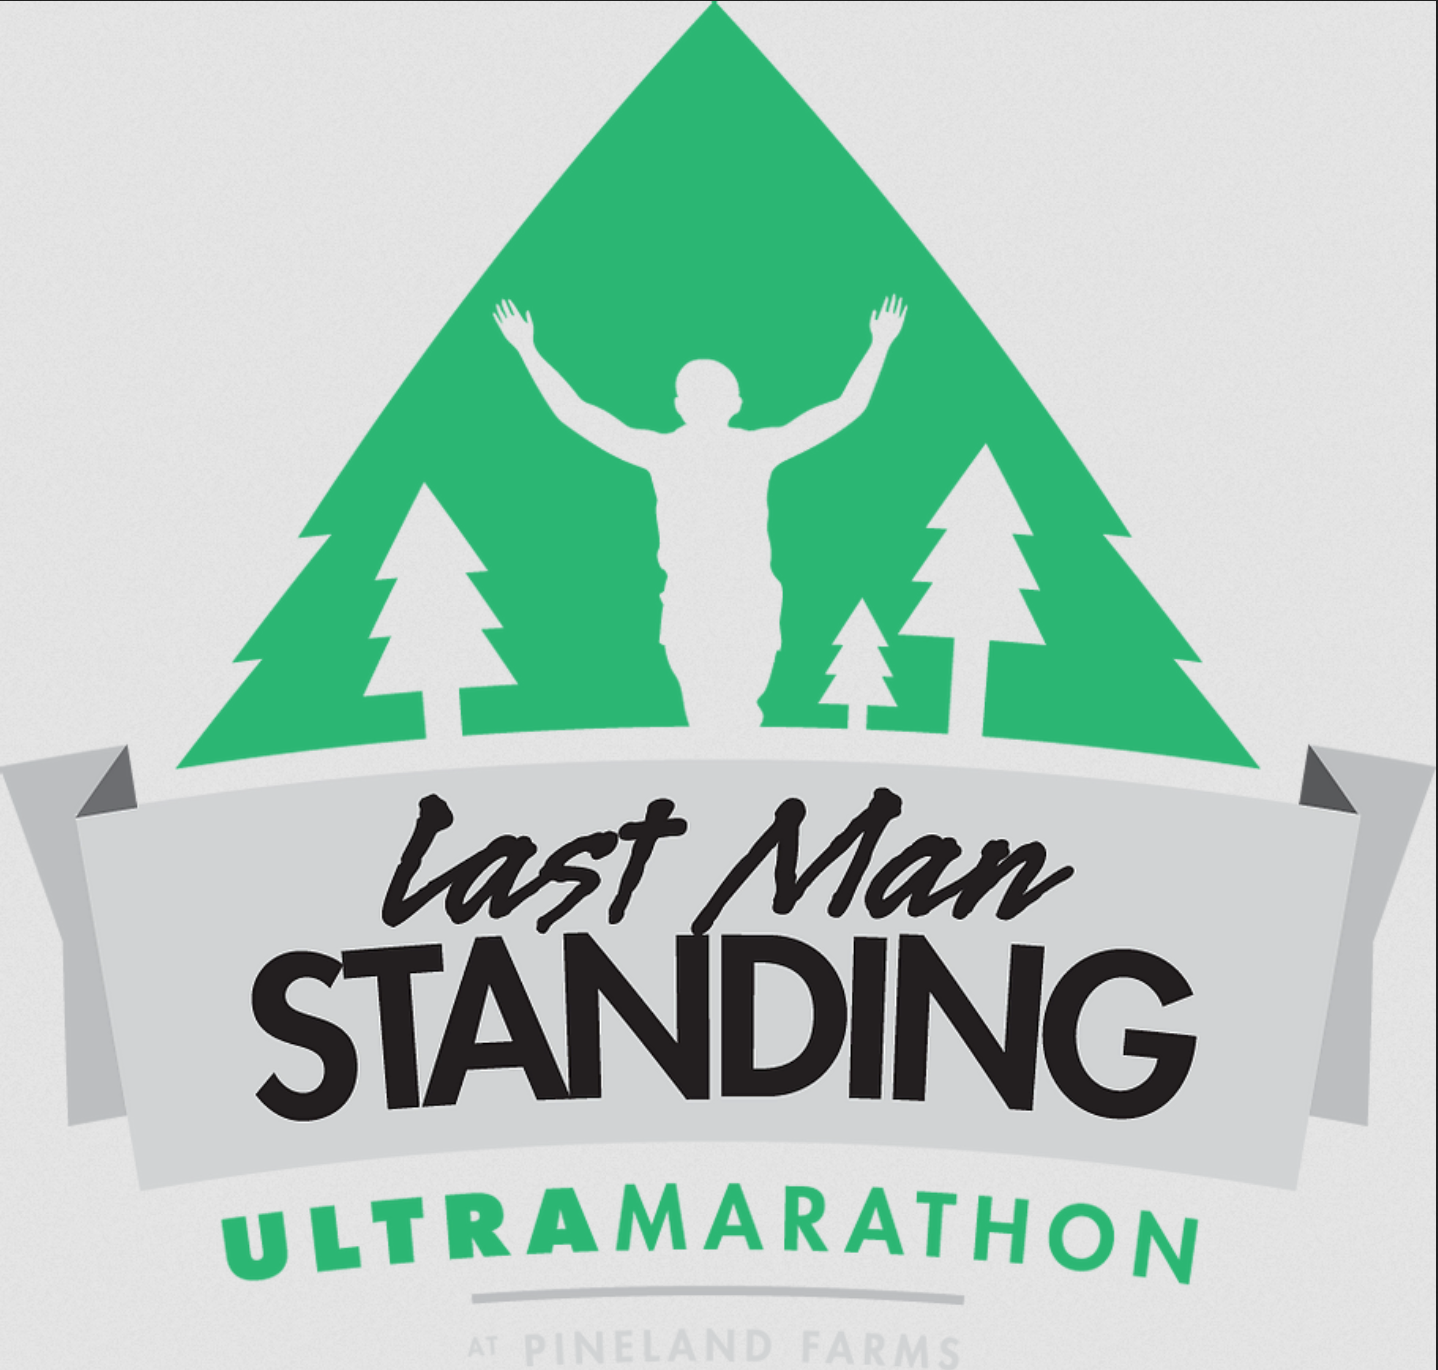 Last Man Standing Ultramarathon at Pineland Farms logo on RaceRaves